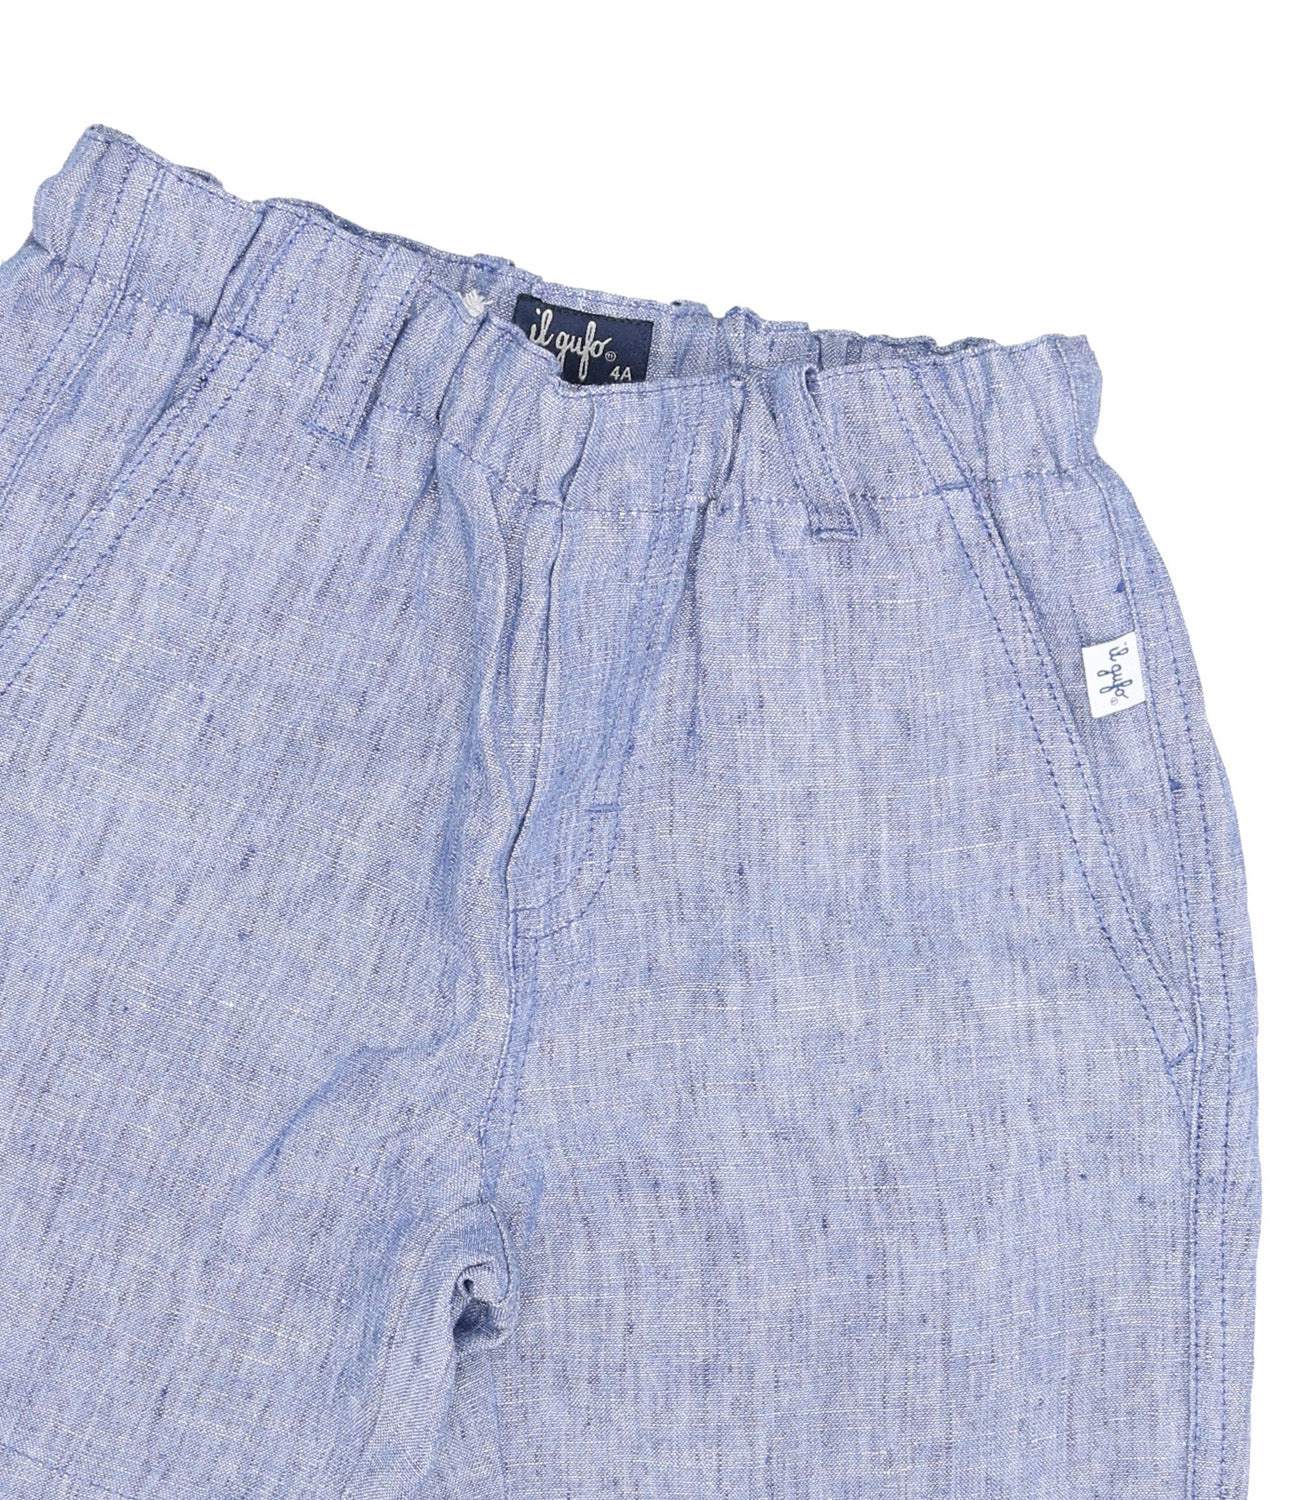 Bermuda Shorts Blue